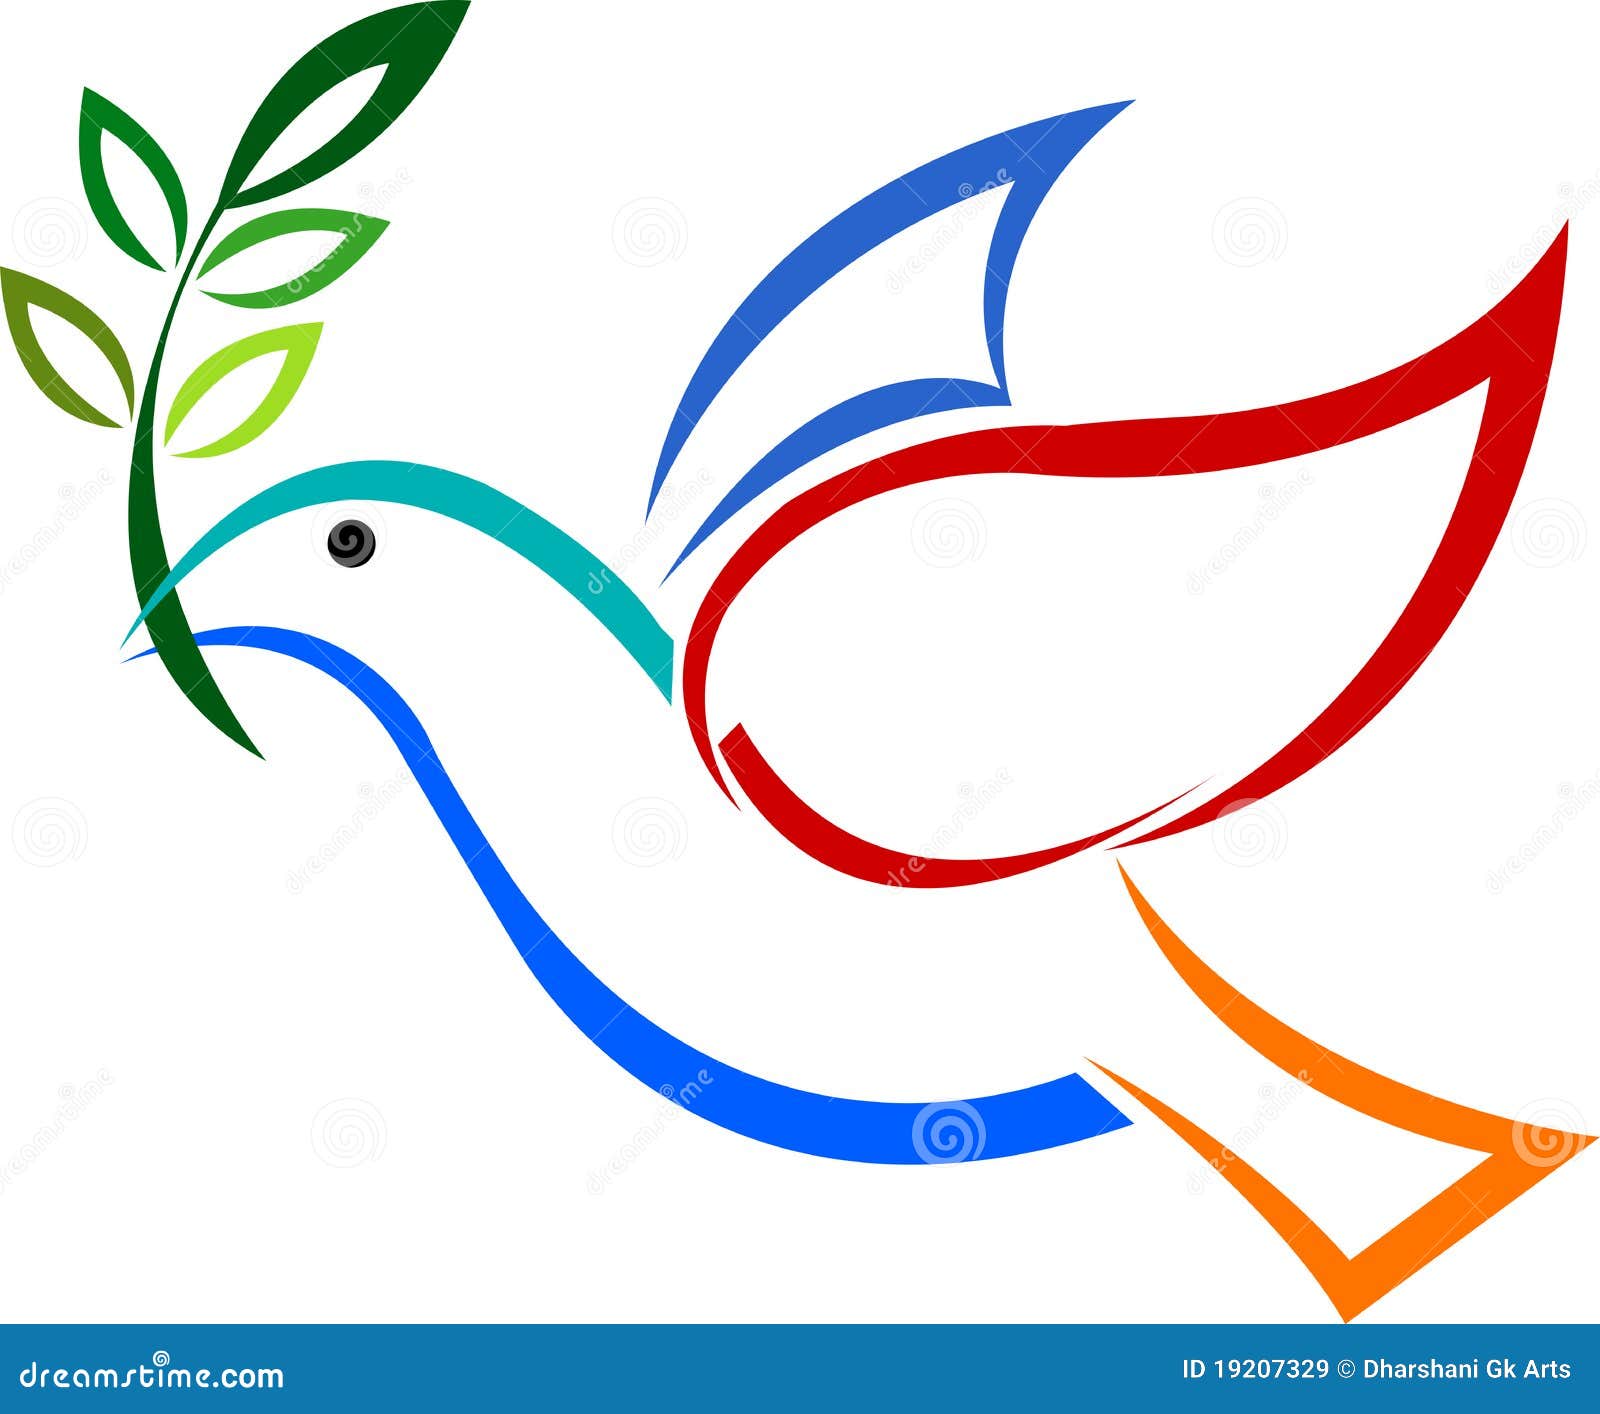 Международный день птиц символ